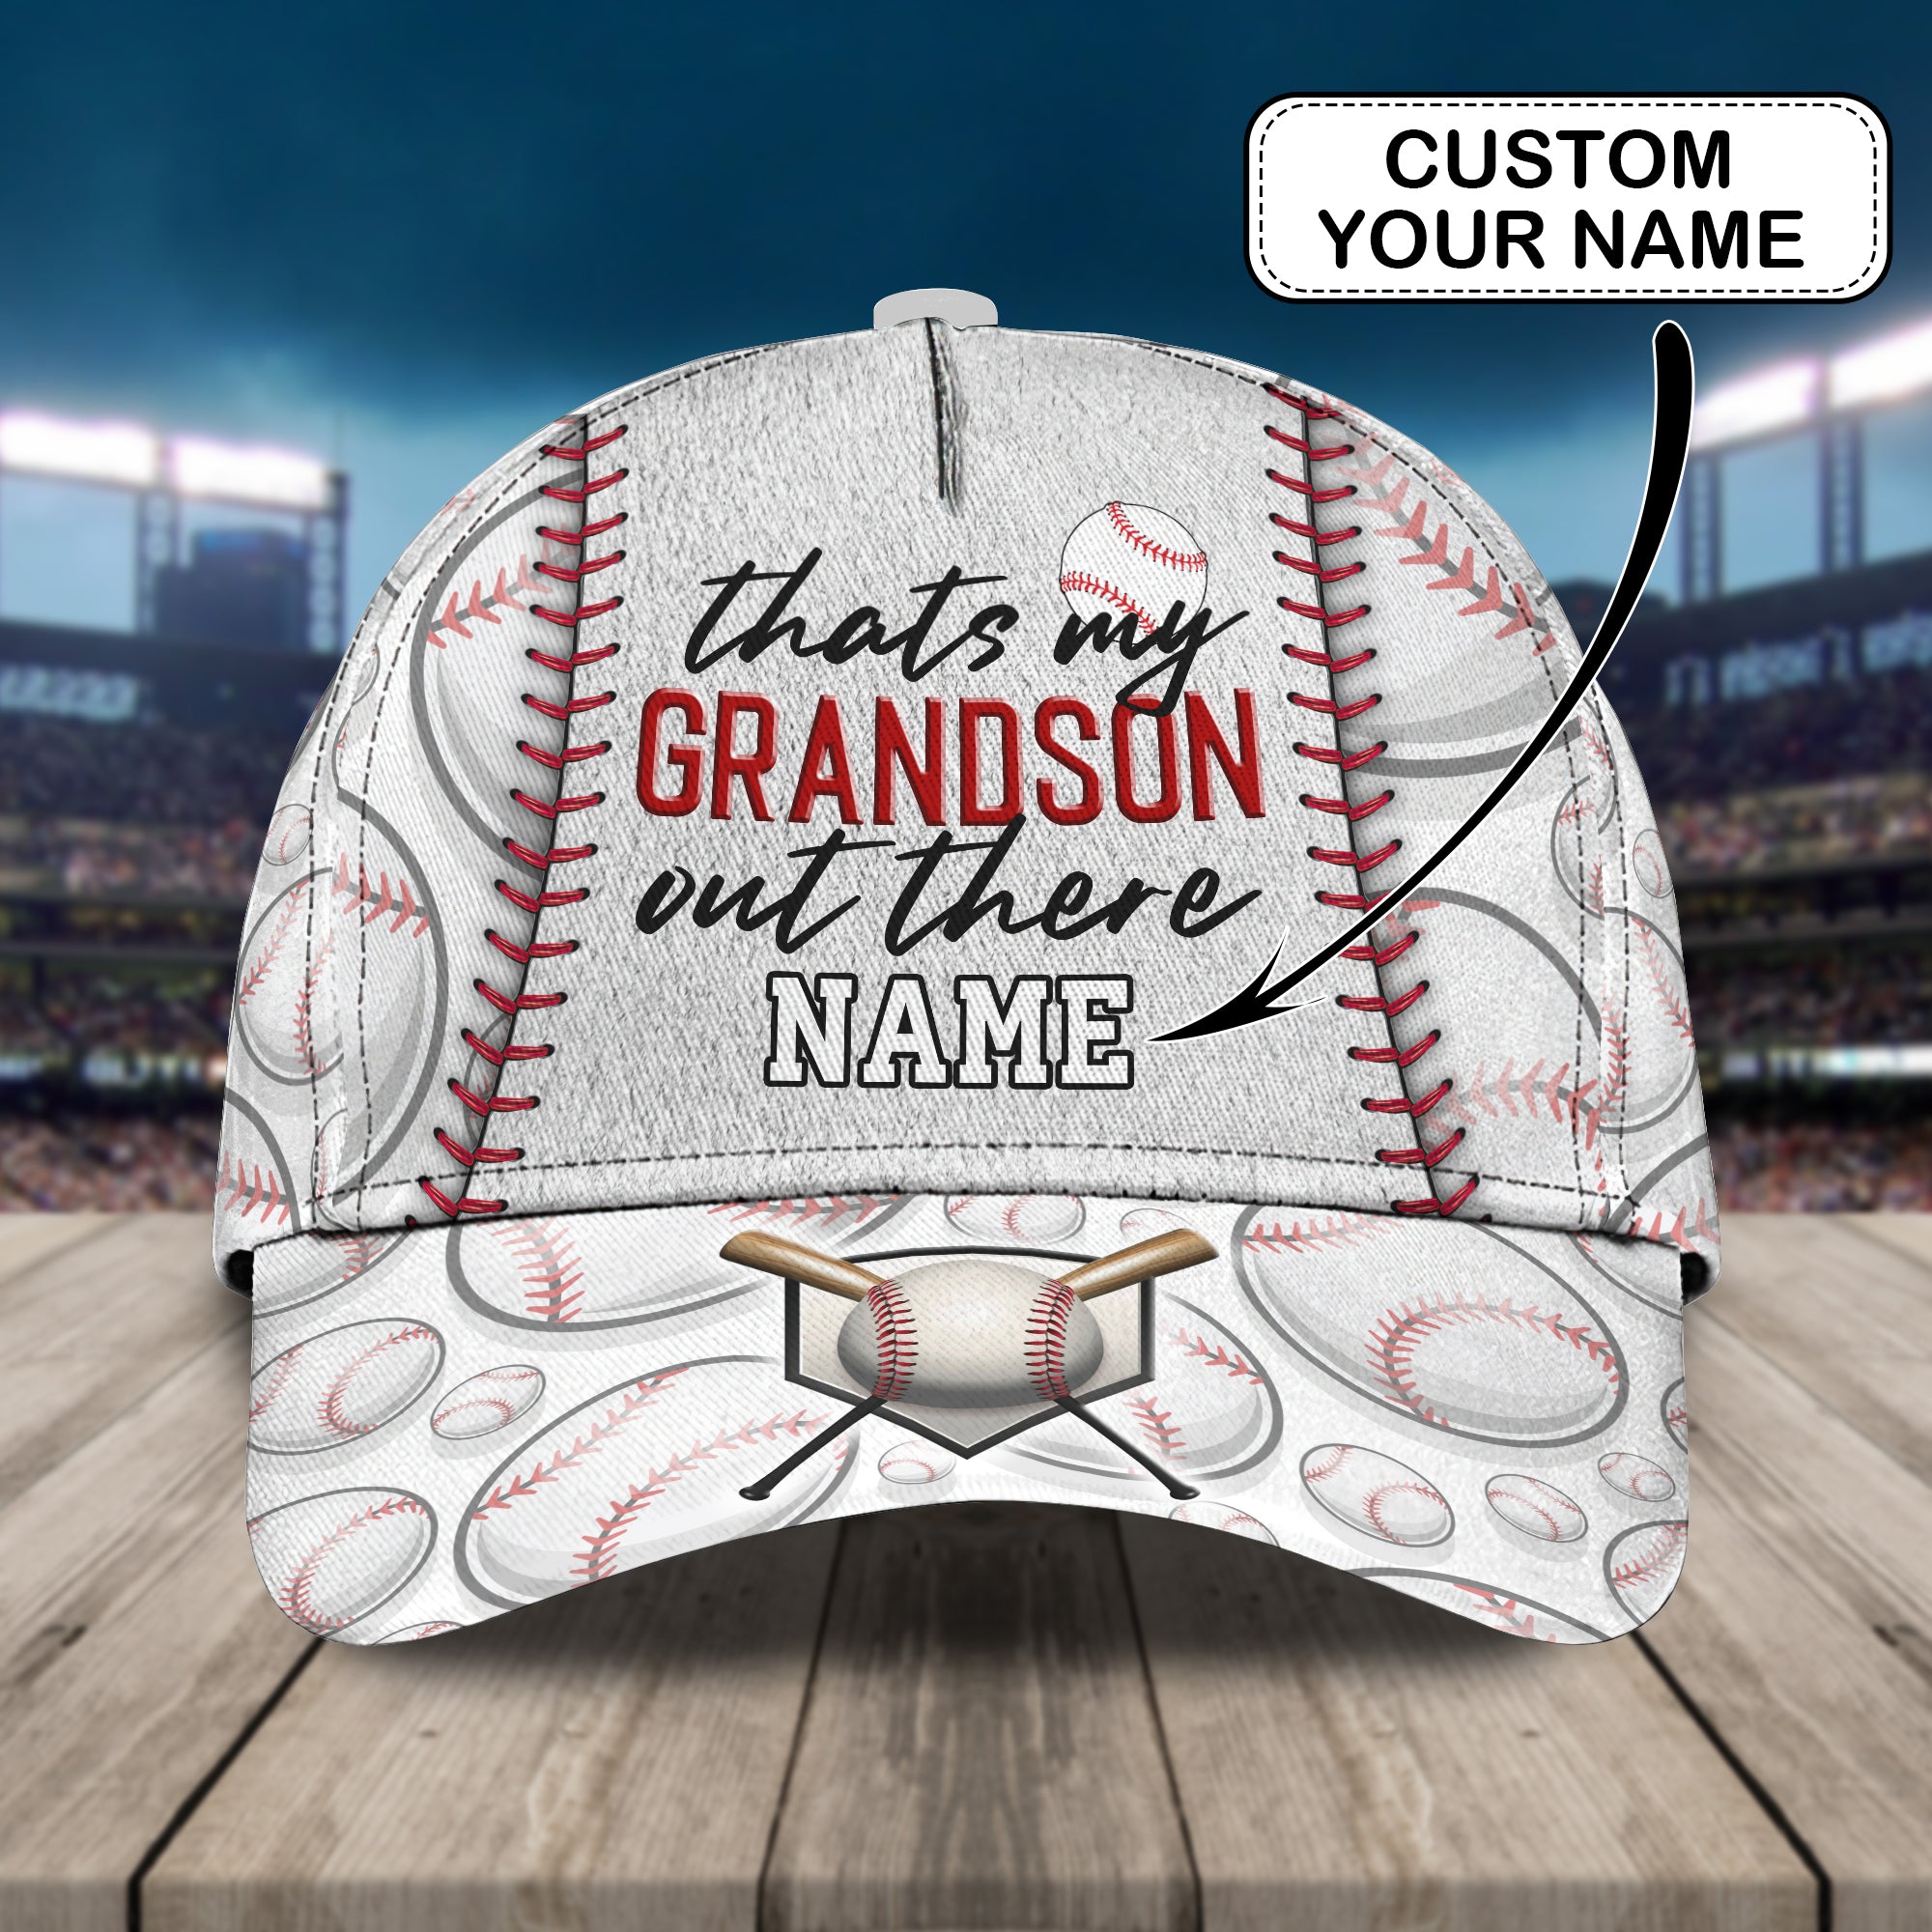 Grandson- baseball - Personalized Name Cap - Dta-d5